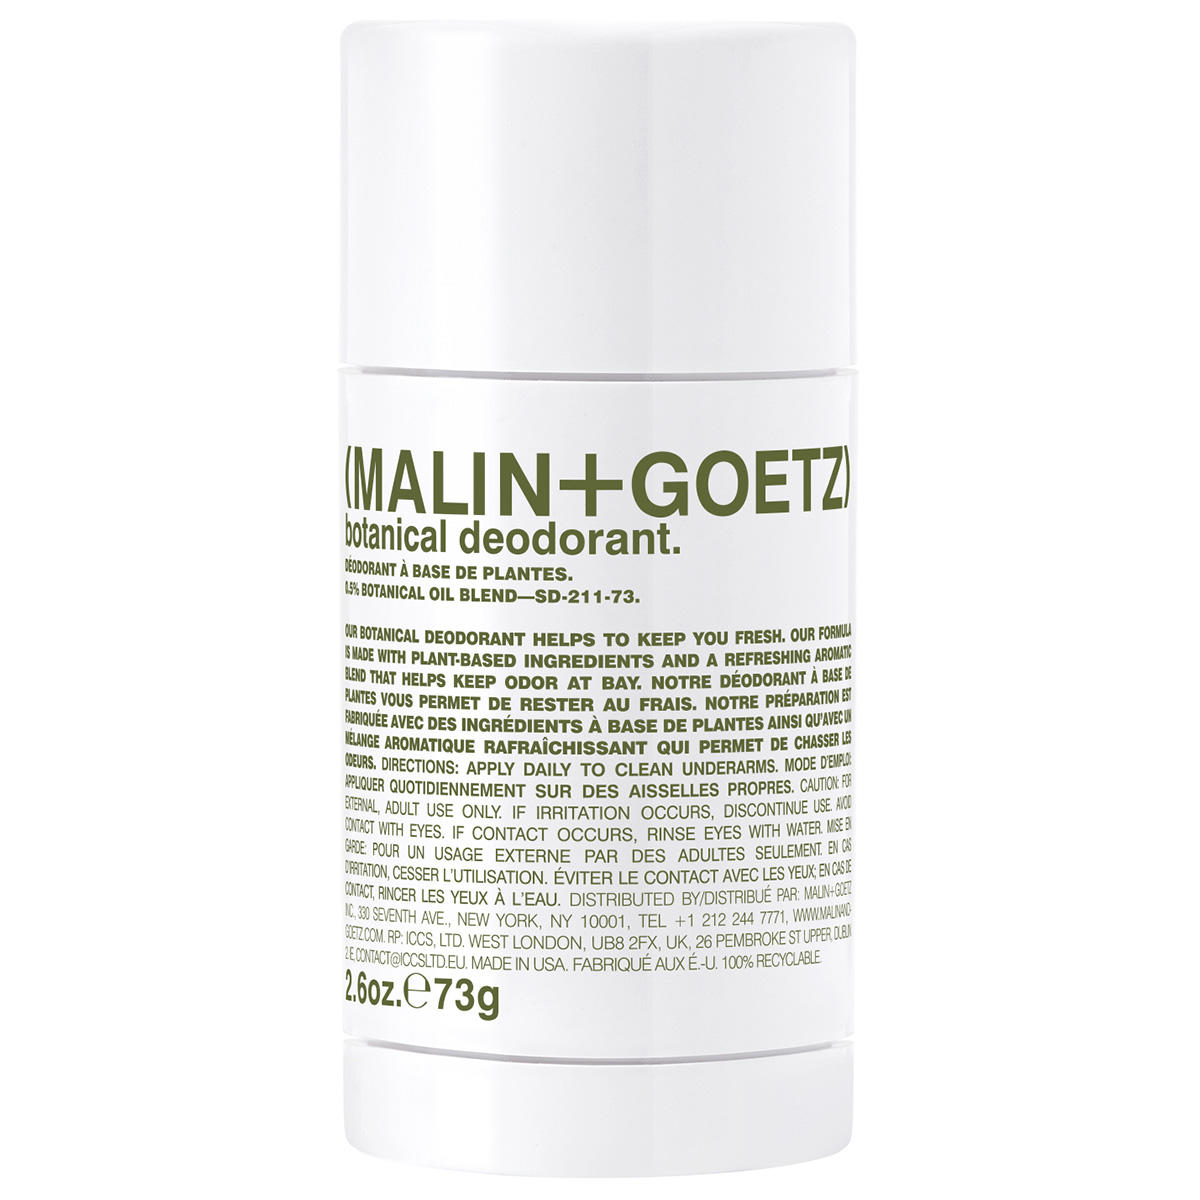 (MALIN+GOETZ) Botanical Deodorant 73 g - 1